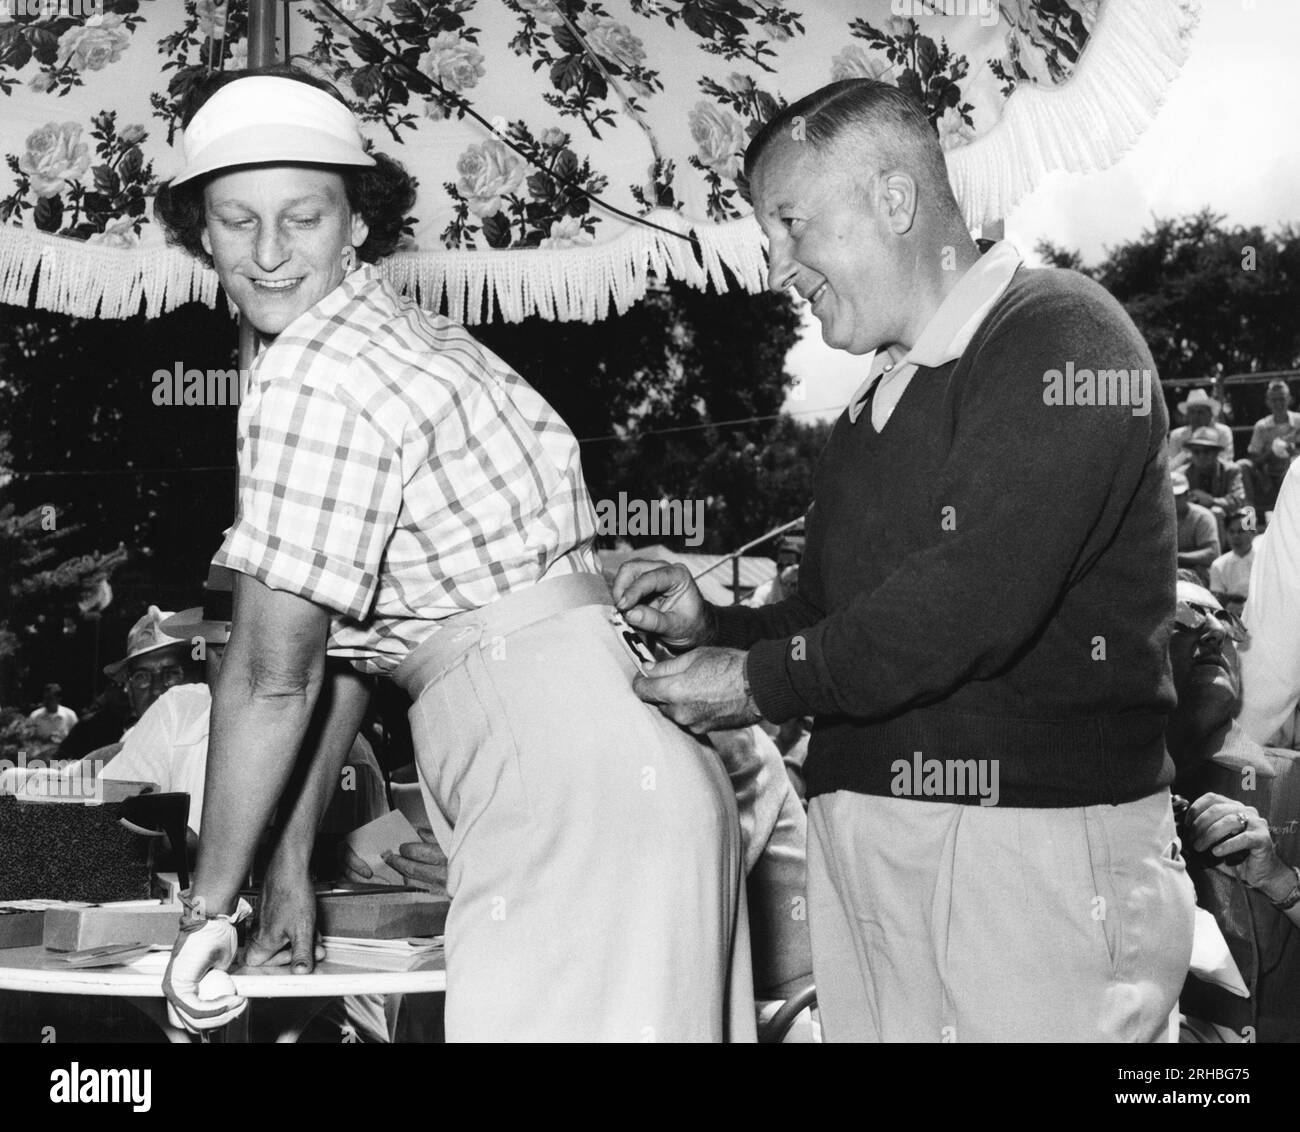 Niles, Illinois: 1953 Babe Didrikson Zaharias bekommt ihre Nummer beim LPGA All American Open Golfturnier im Tam O'Shanter Country Club. Stockfoto